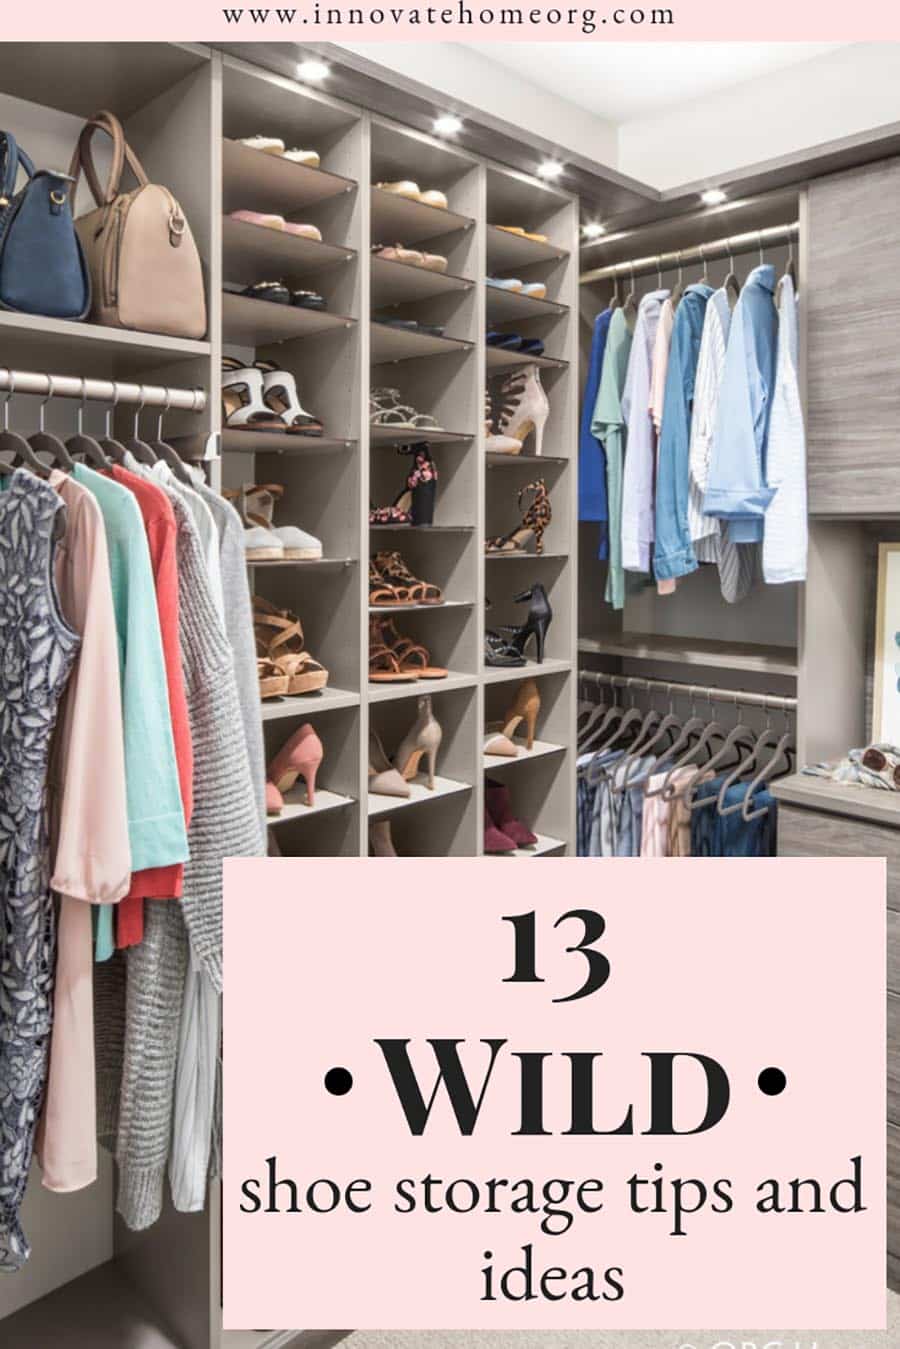 Trick 13 - shoe storage tips for a Clintonville closet | Innovate Home Org | Storage Organization | Custom Closet Storage